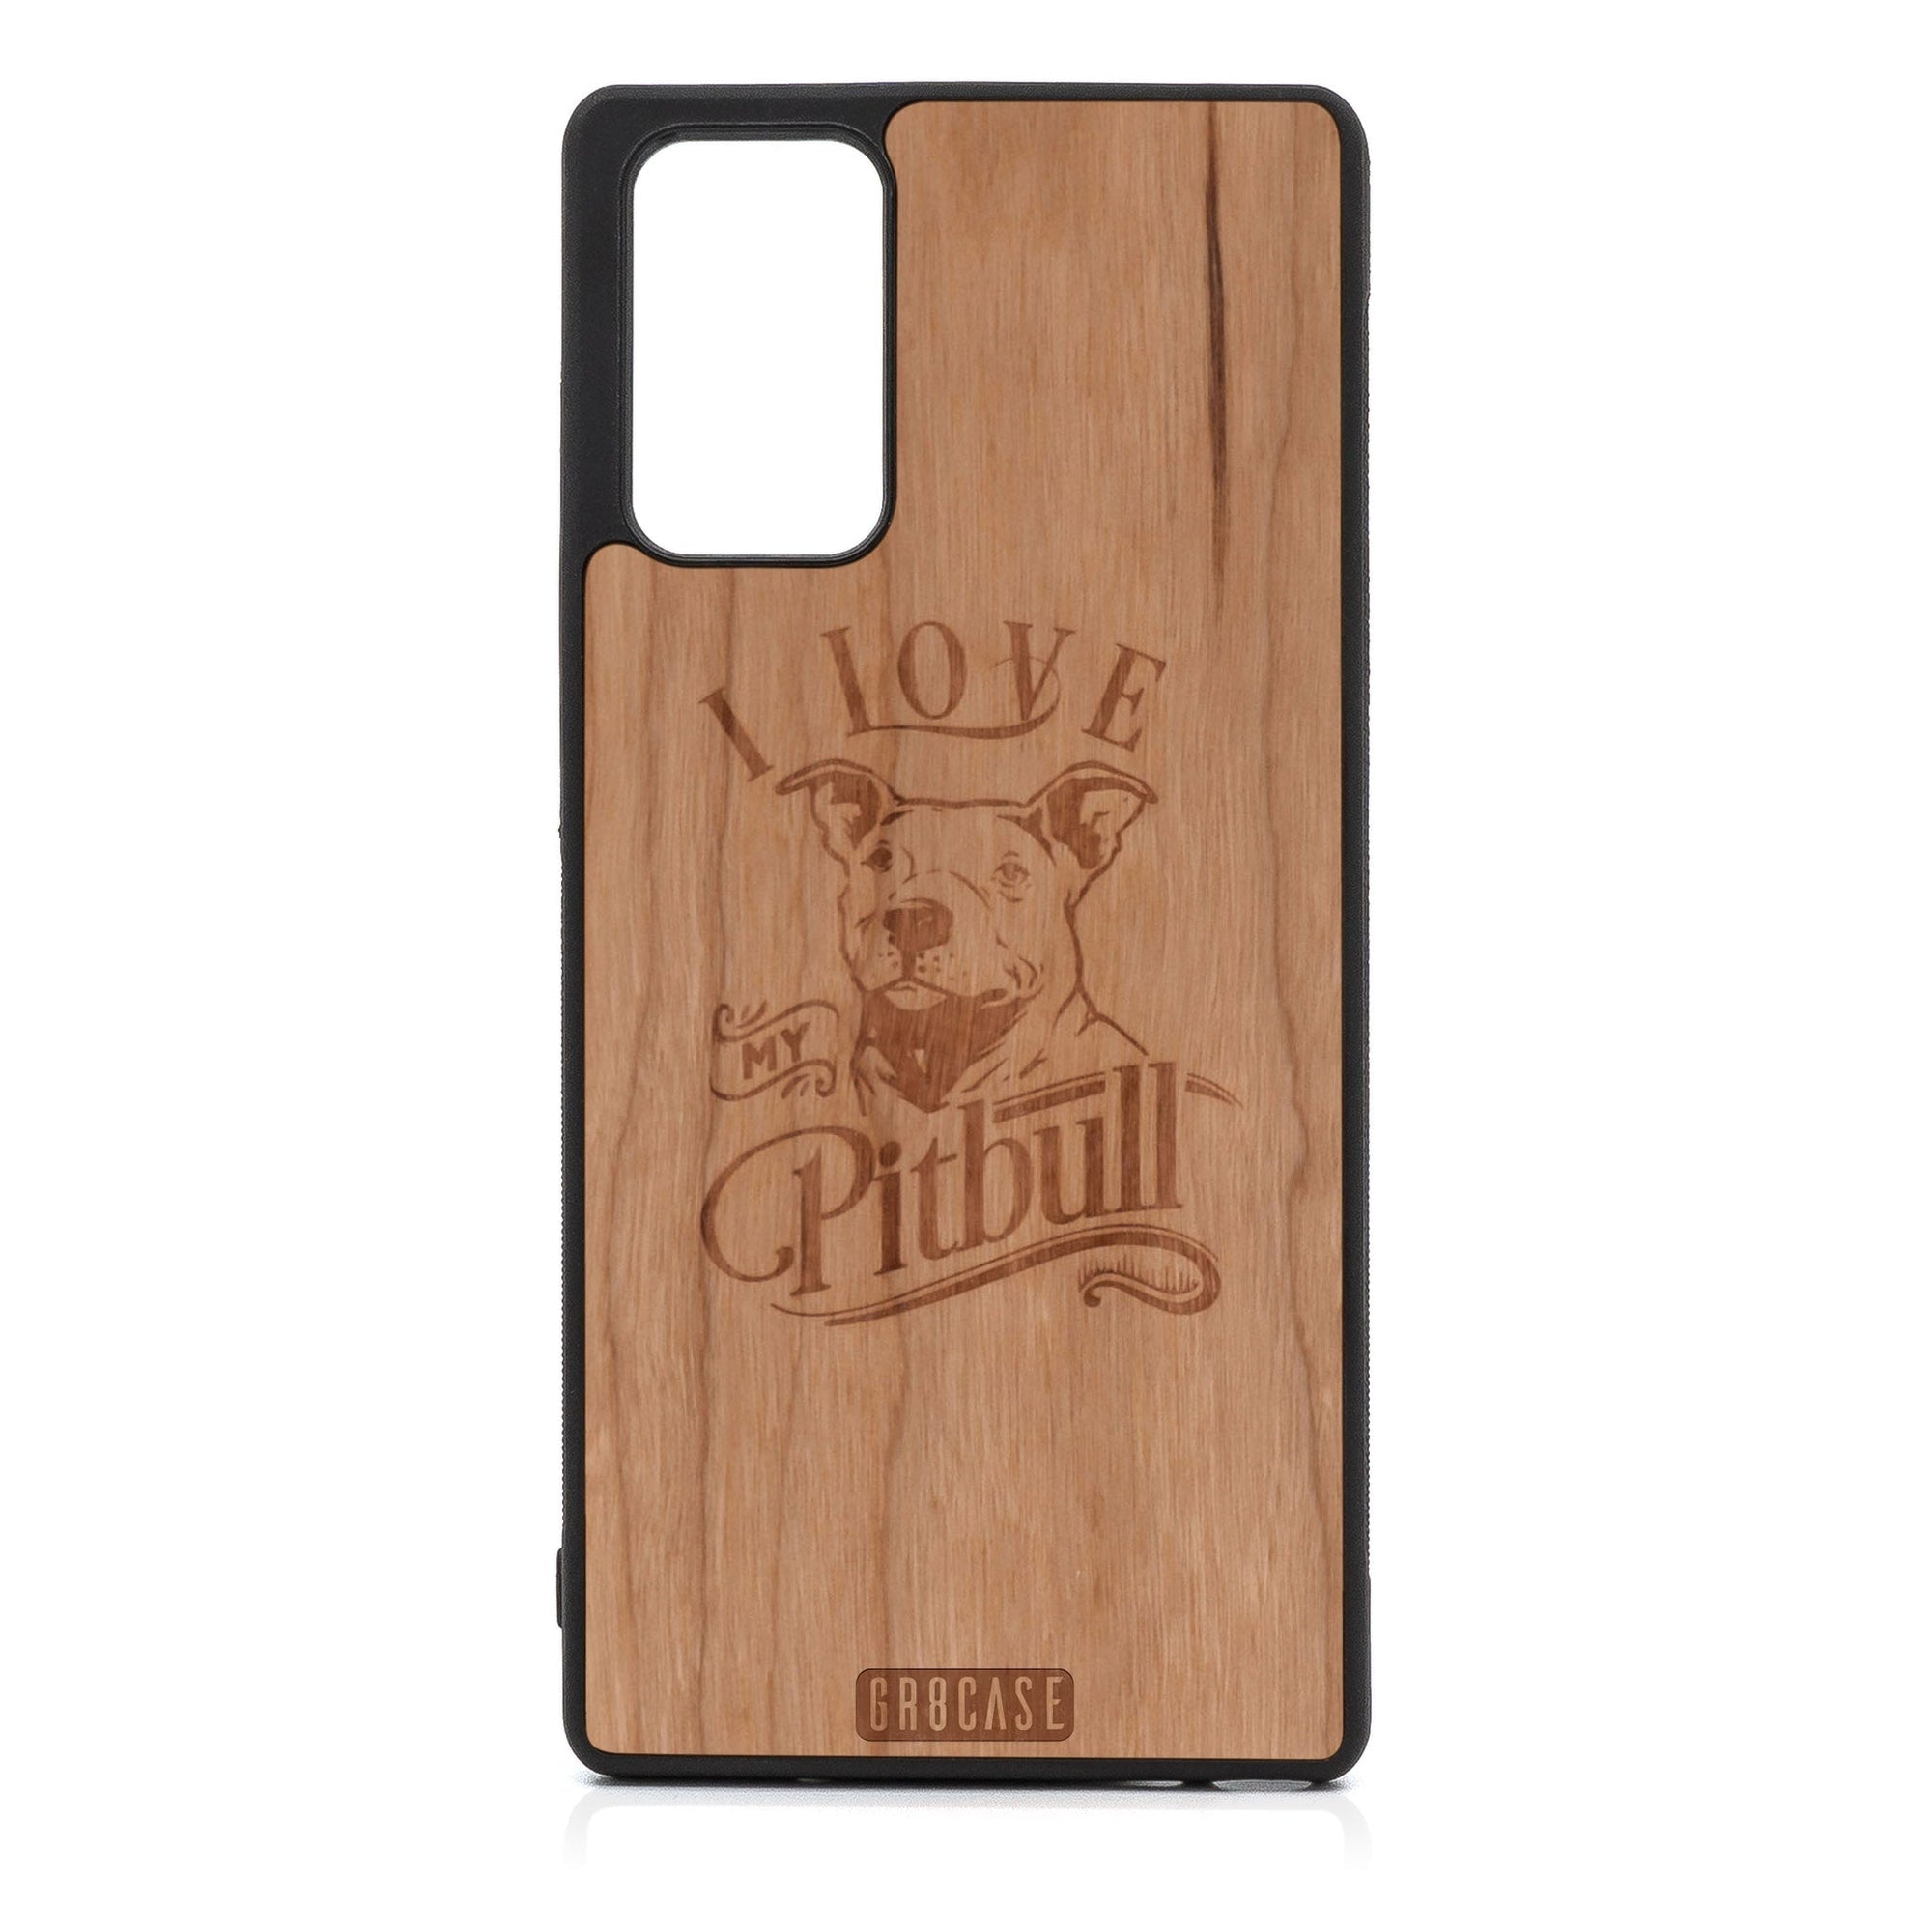 I Love My Pitbull Design Wood Case For Samsung Galaxy A72 5G